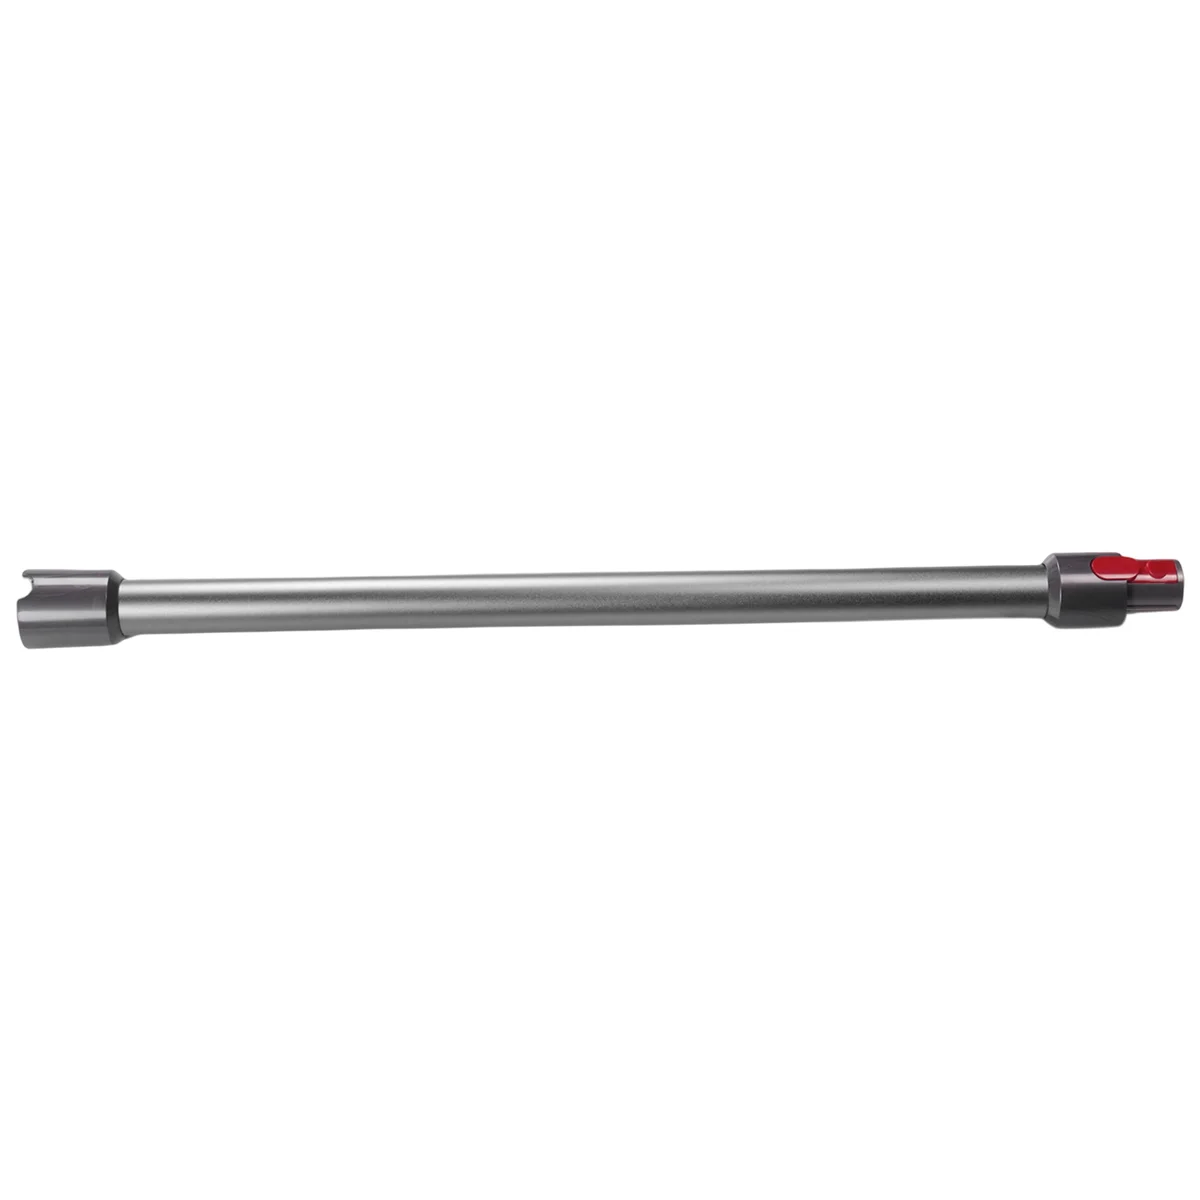 Vacuum Cleaner Accessories Rod for Dyson V7 V8 V10 V11 Straight Pipe Metal Extension Bar Handheld Wand Tube